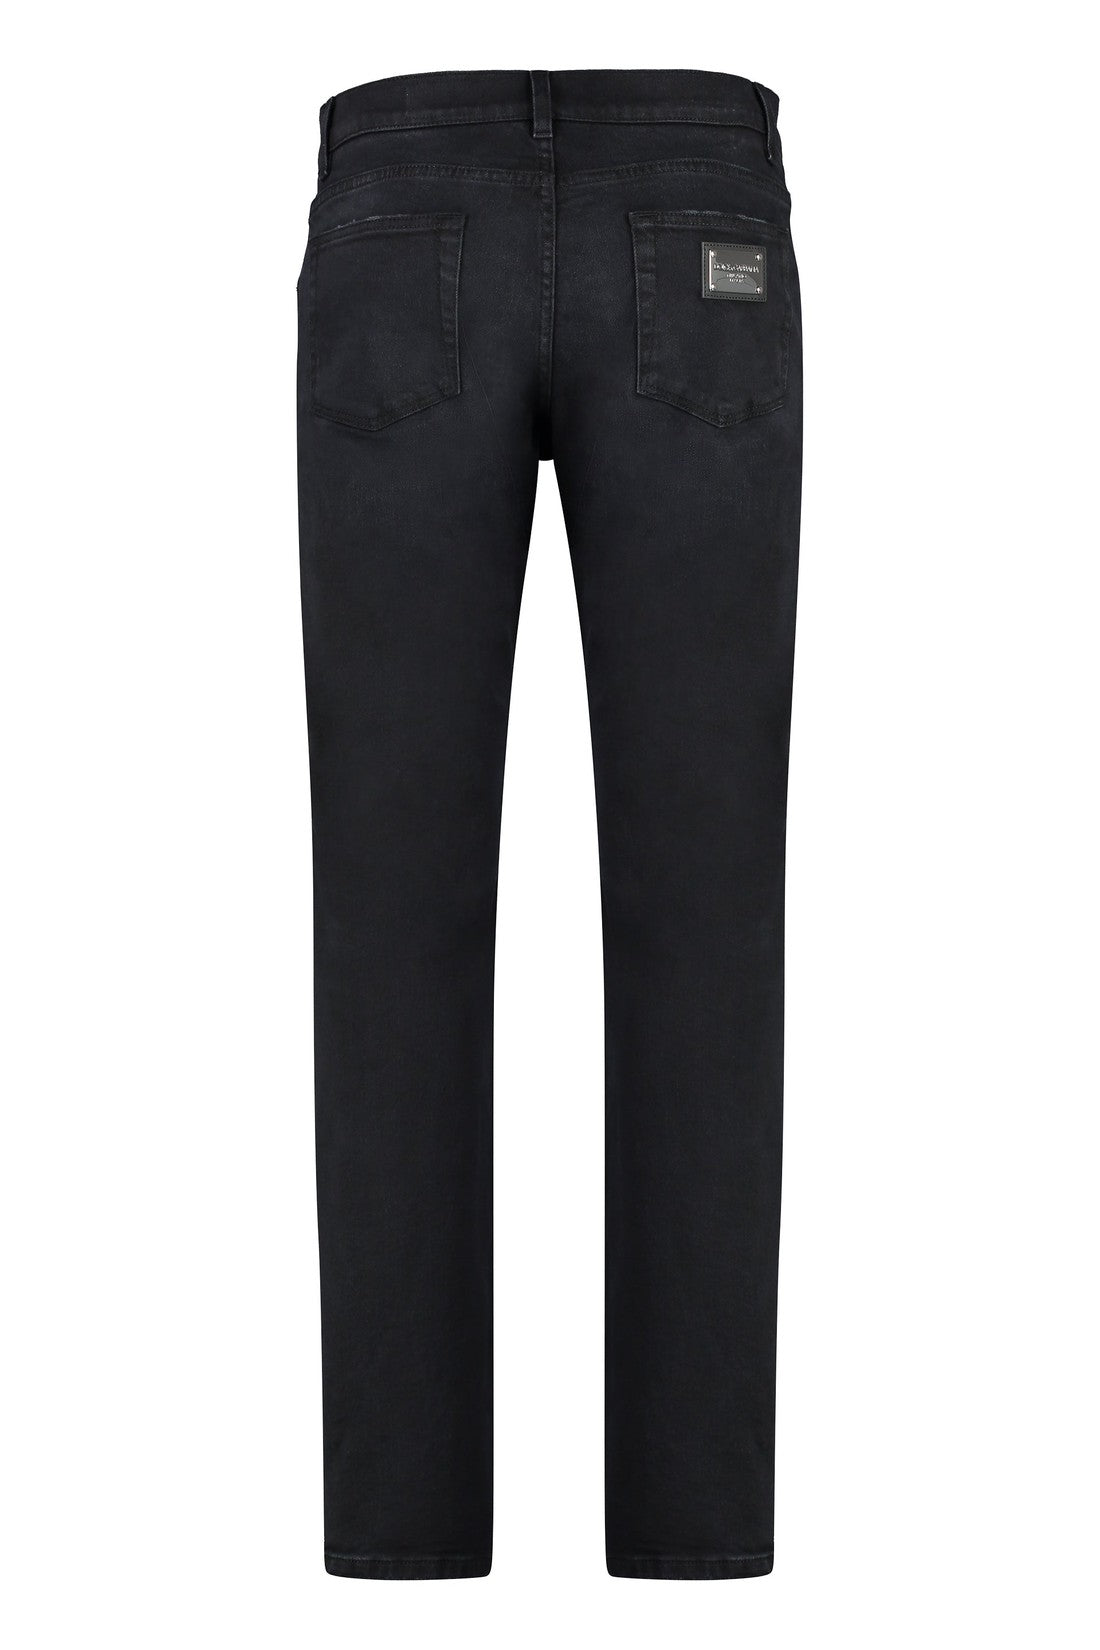 Dolce & Gabbana-OUTLET-SALE-5-pocket slim fit jeans-ARCHIVIST